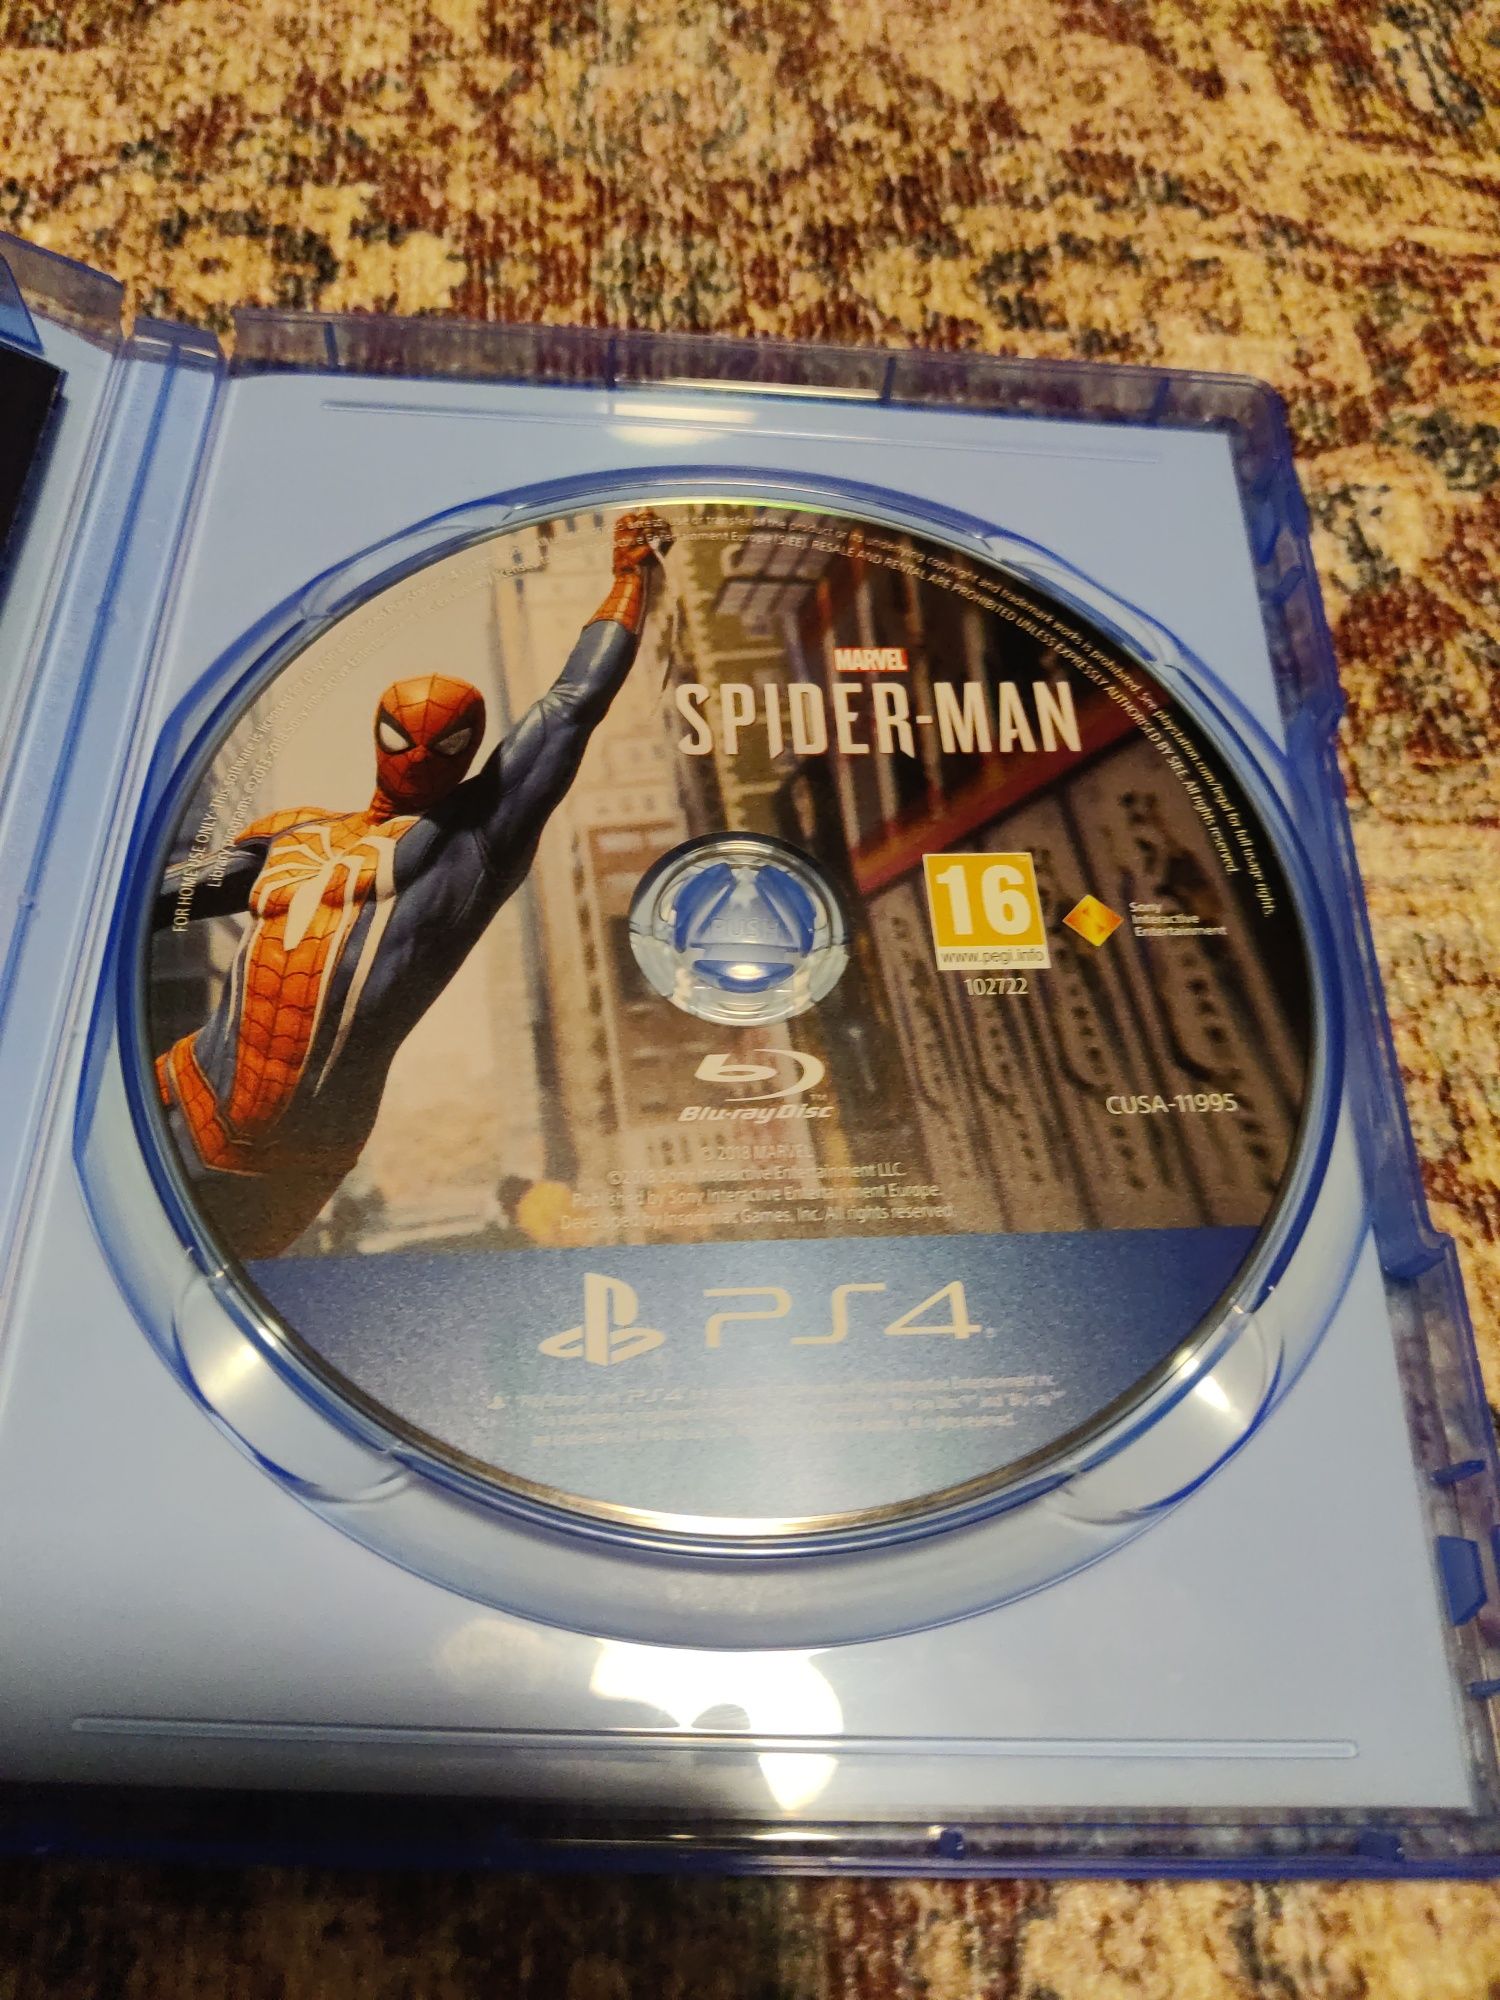 Spiderman Playstation 4